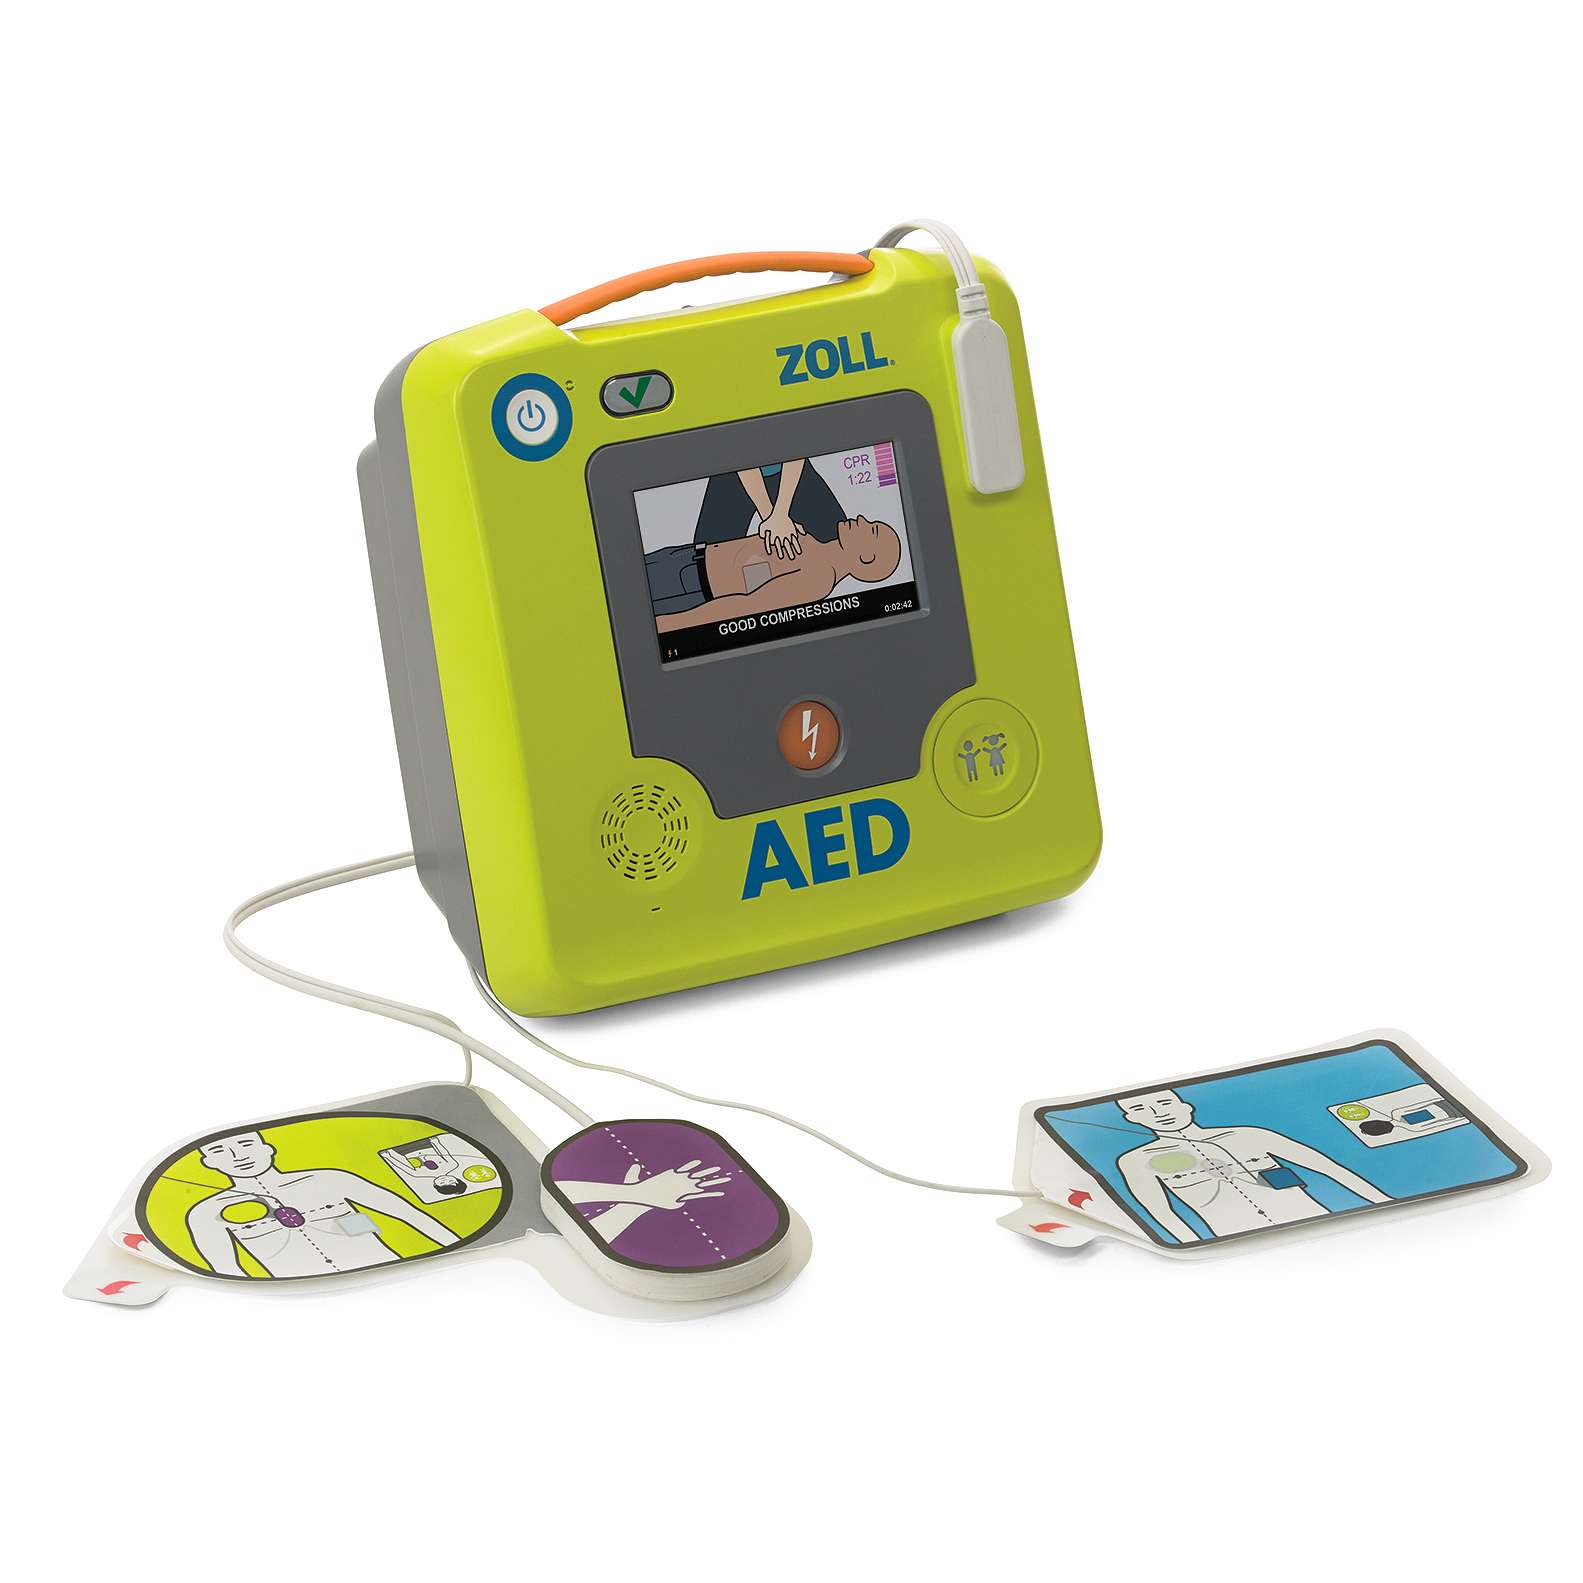 DefiStore.de Zoll Defibrillator "AED 3" von DefiStore.de Zoll